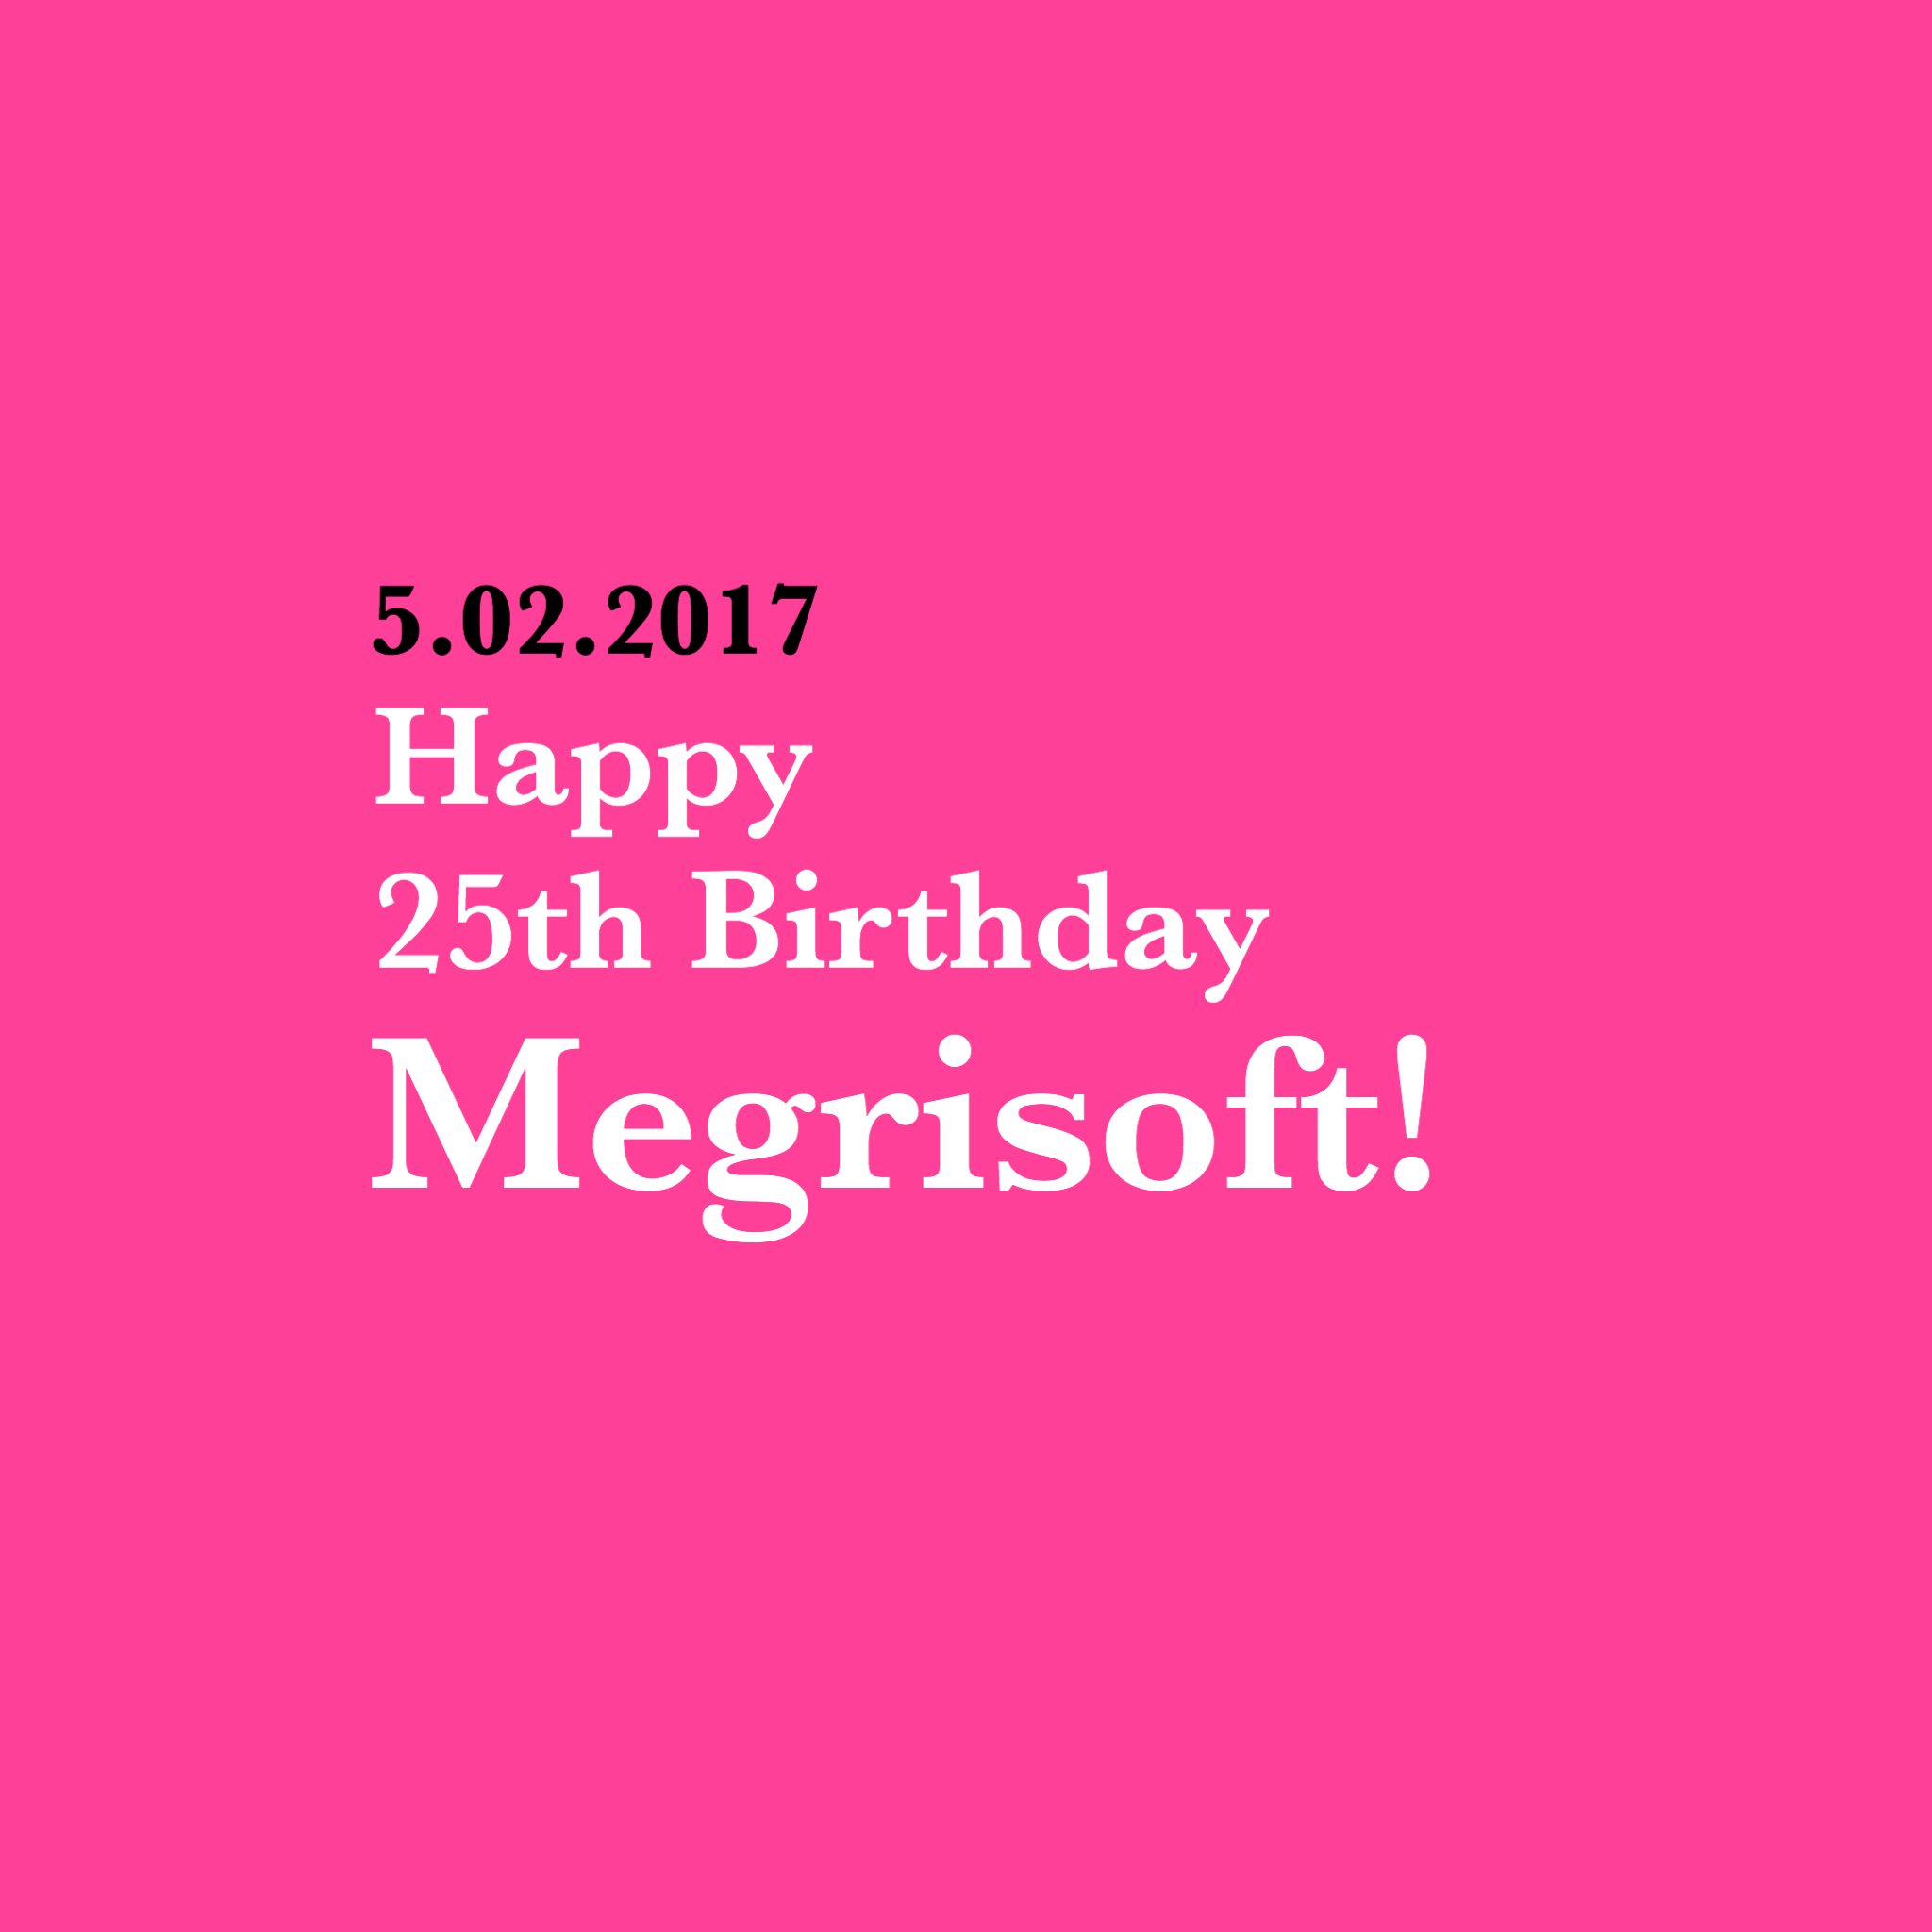 Megrisoft's 25th Birthday